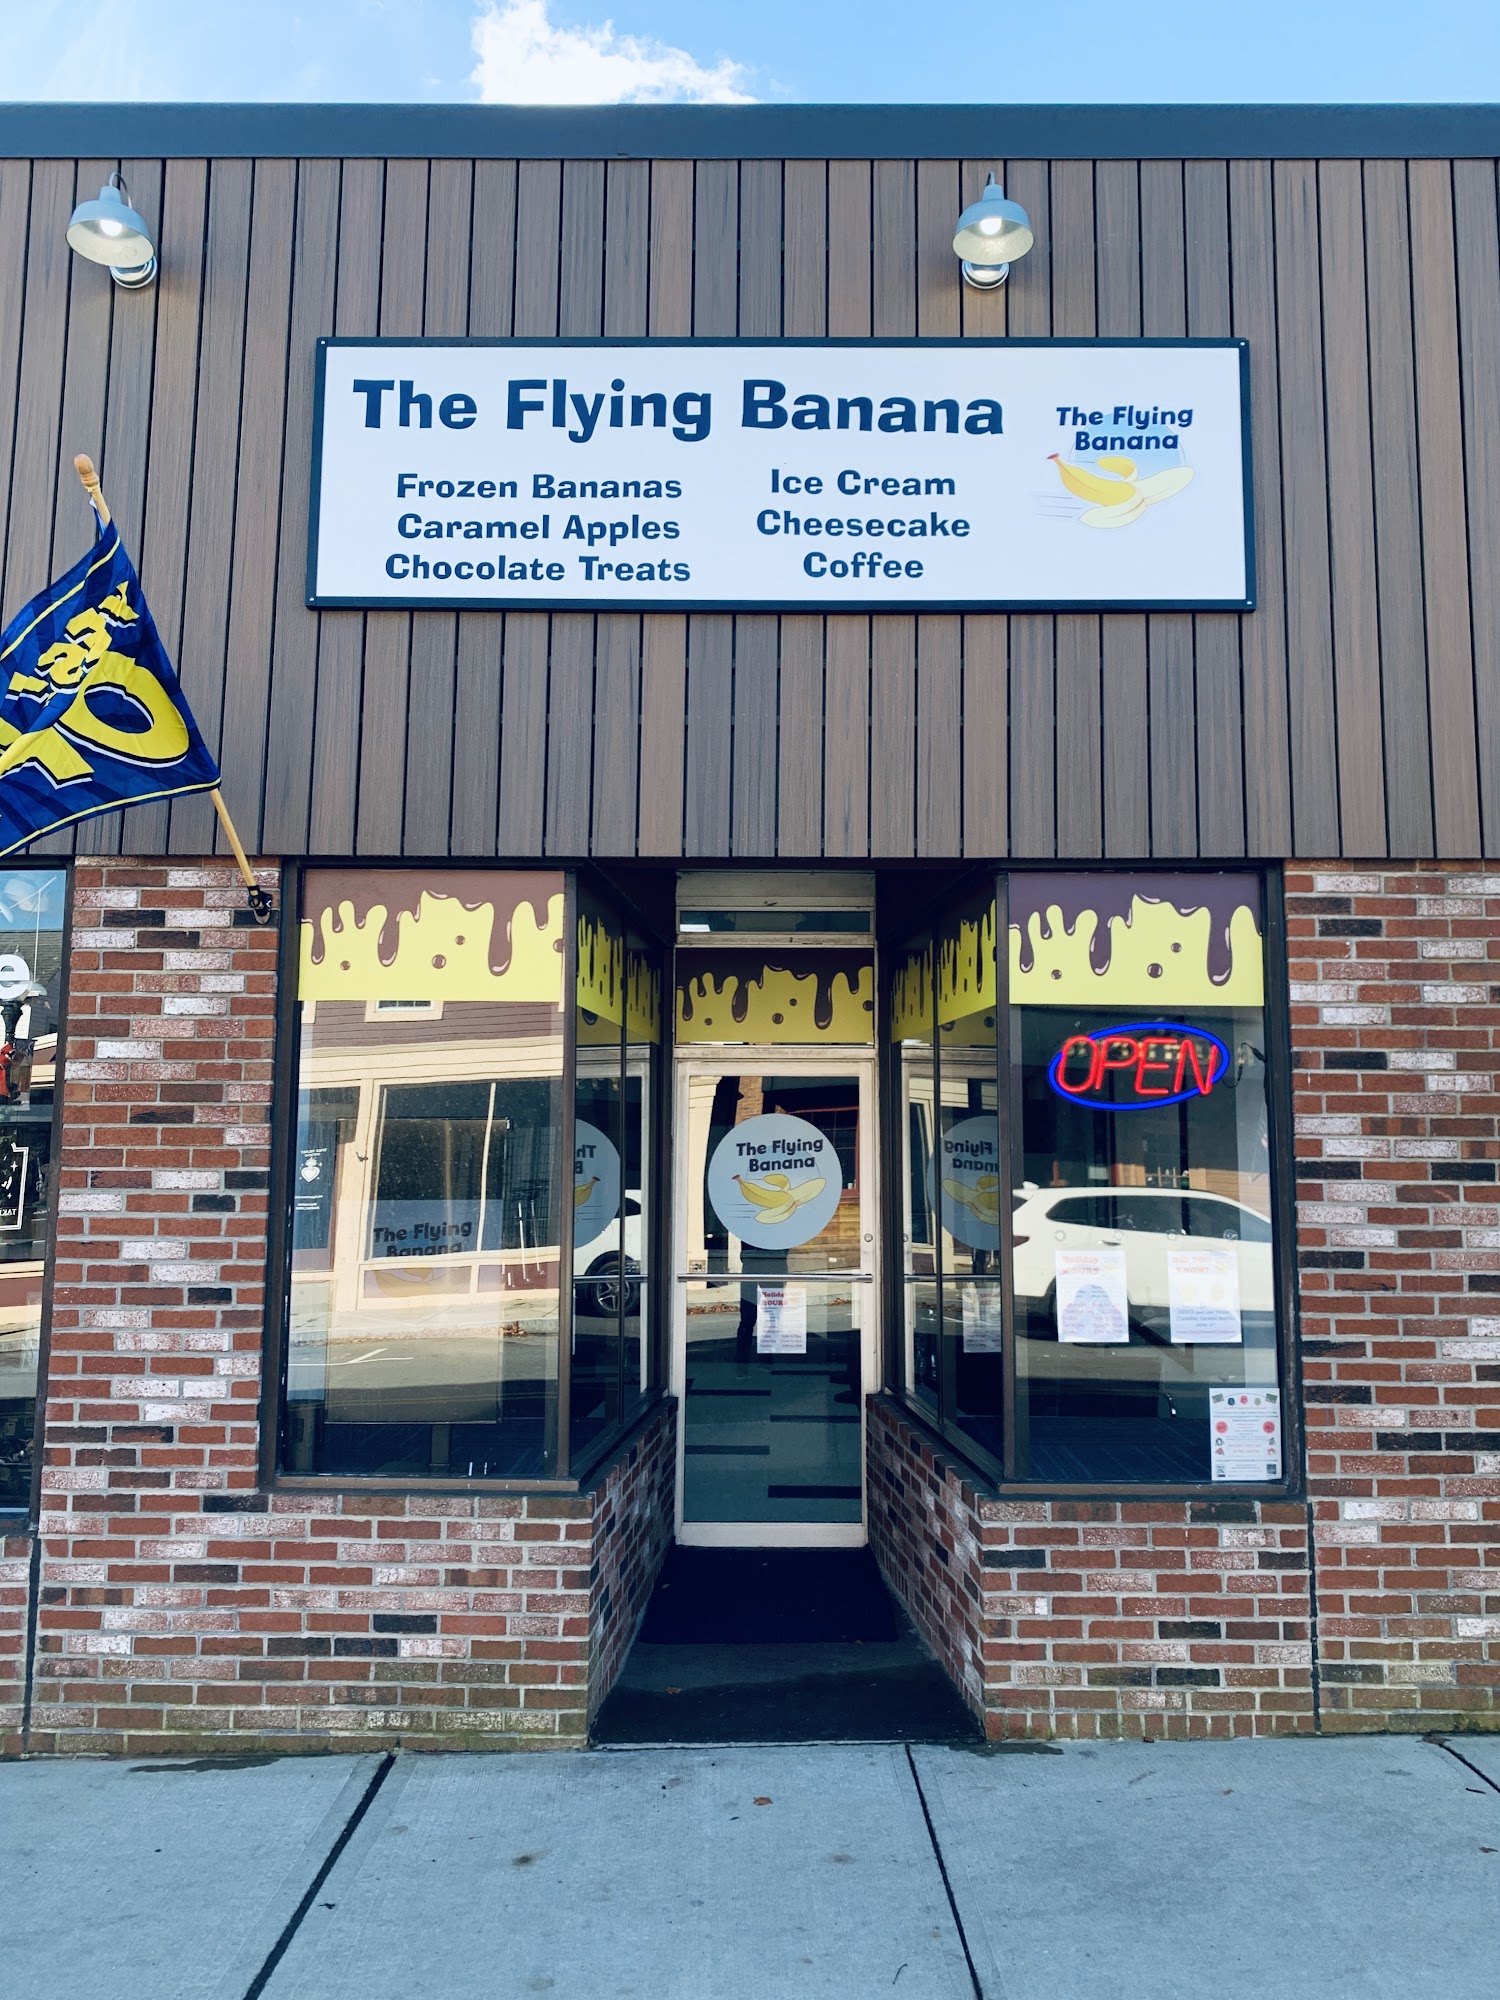 The Flying Banana